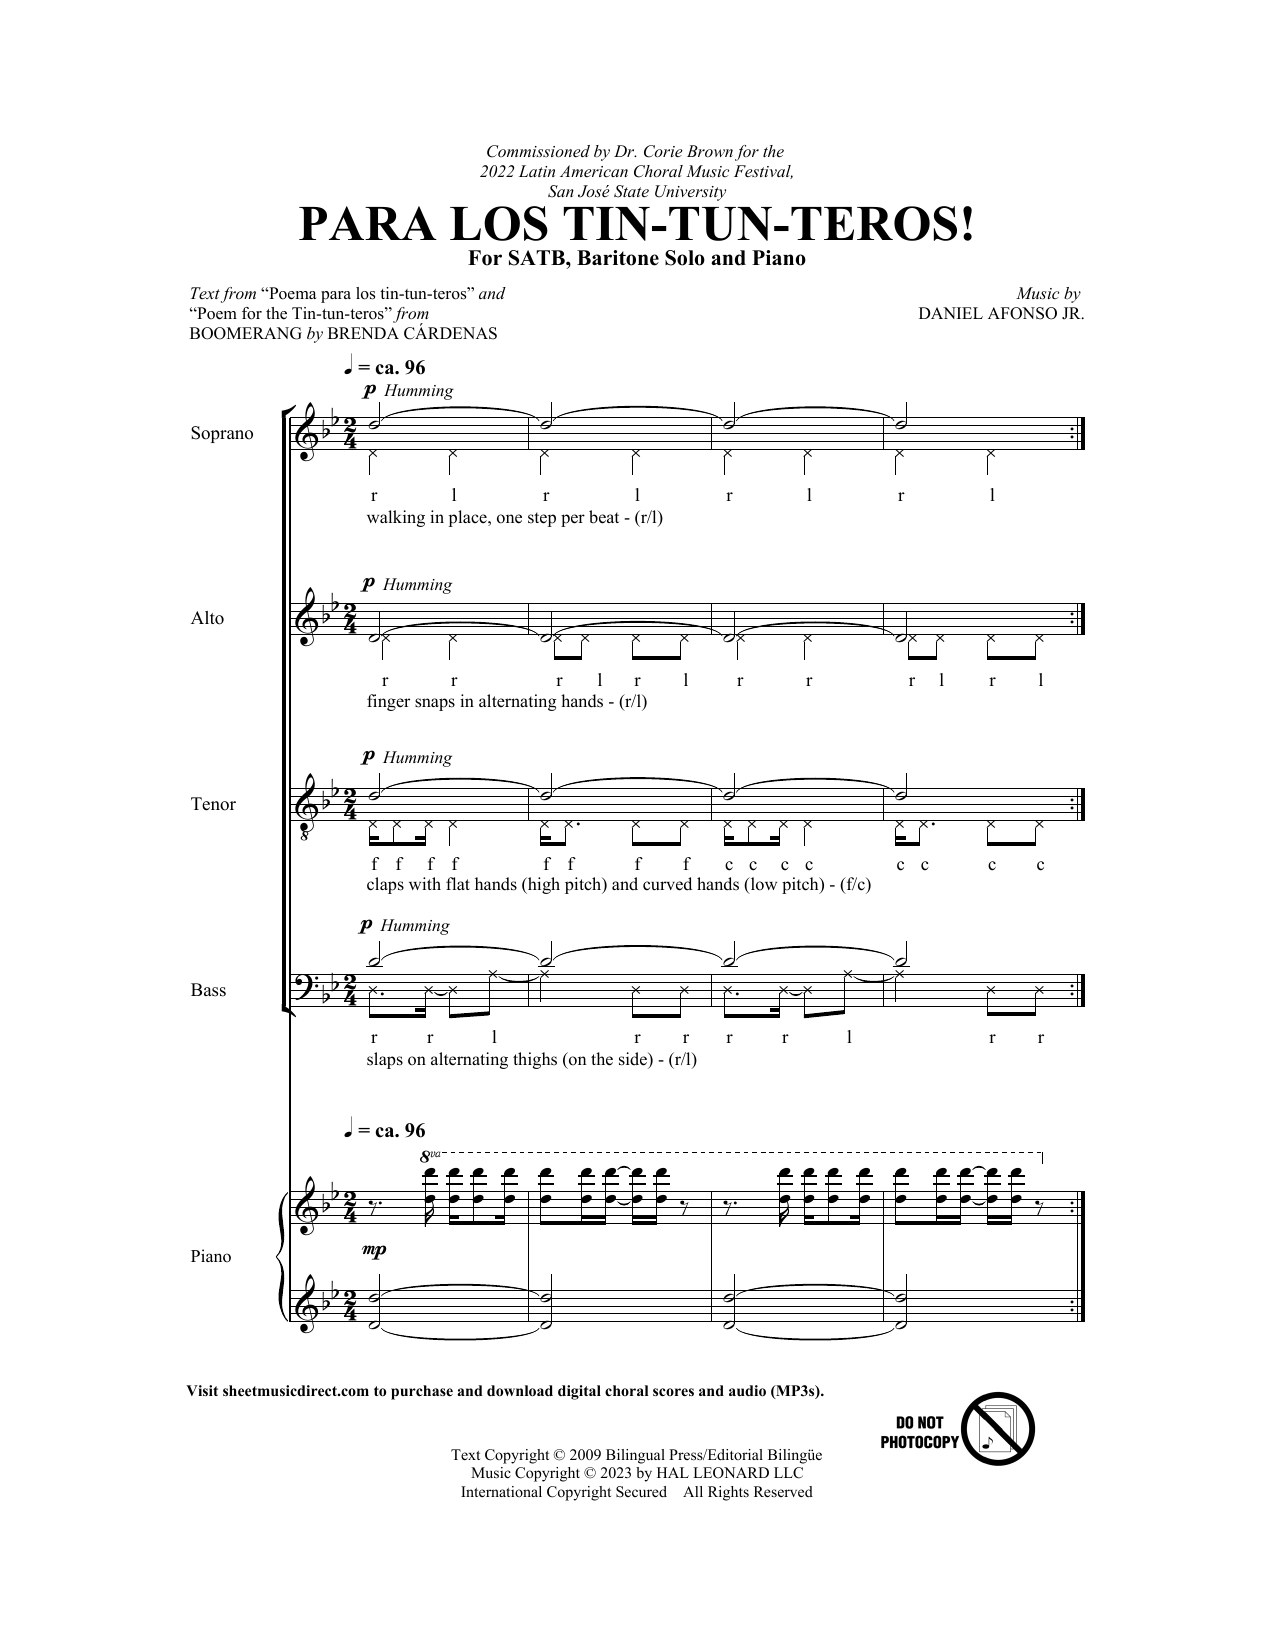 Daniel Afonso Para los tin-tun-teros! Sheet Music Notes & Chords for SATB Choir - Download or Print PDF